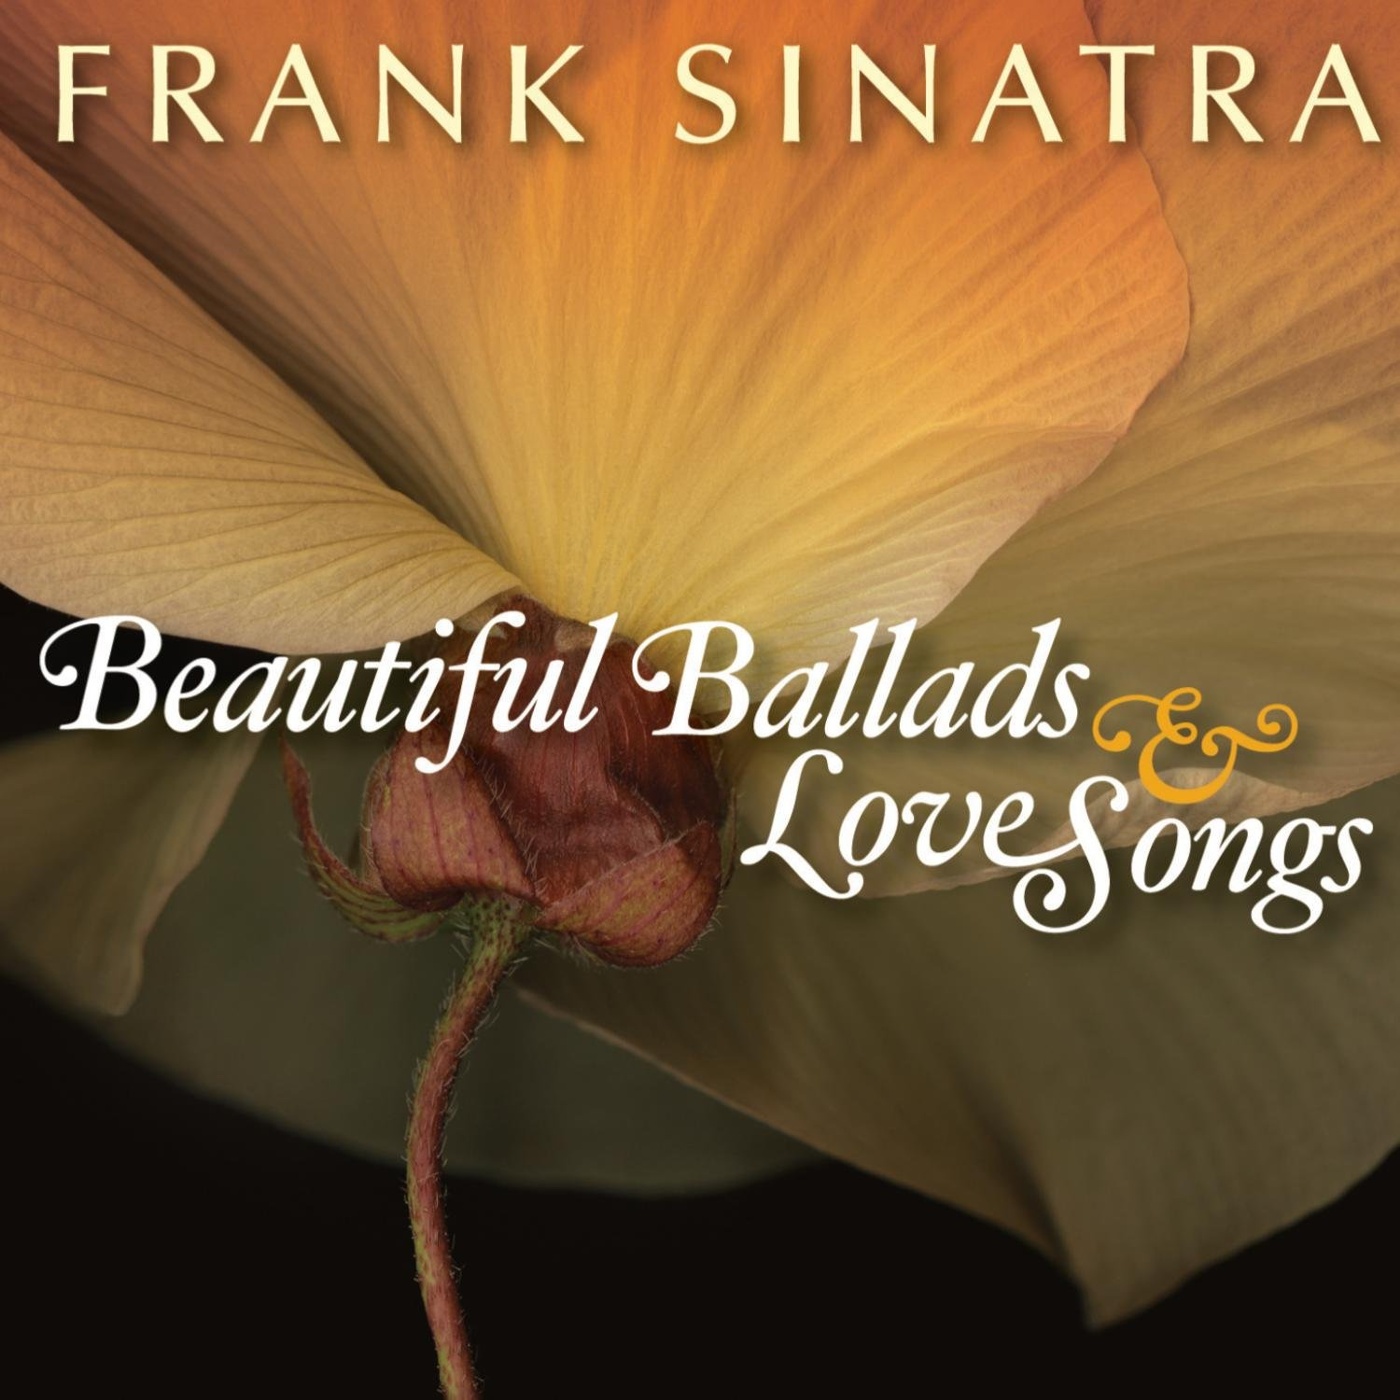 Beautiful Ballads. Frank Sinatra Songs. Tommy Dorsey - Stardust on the Moon album картинки. Ballad Songs.